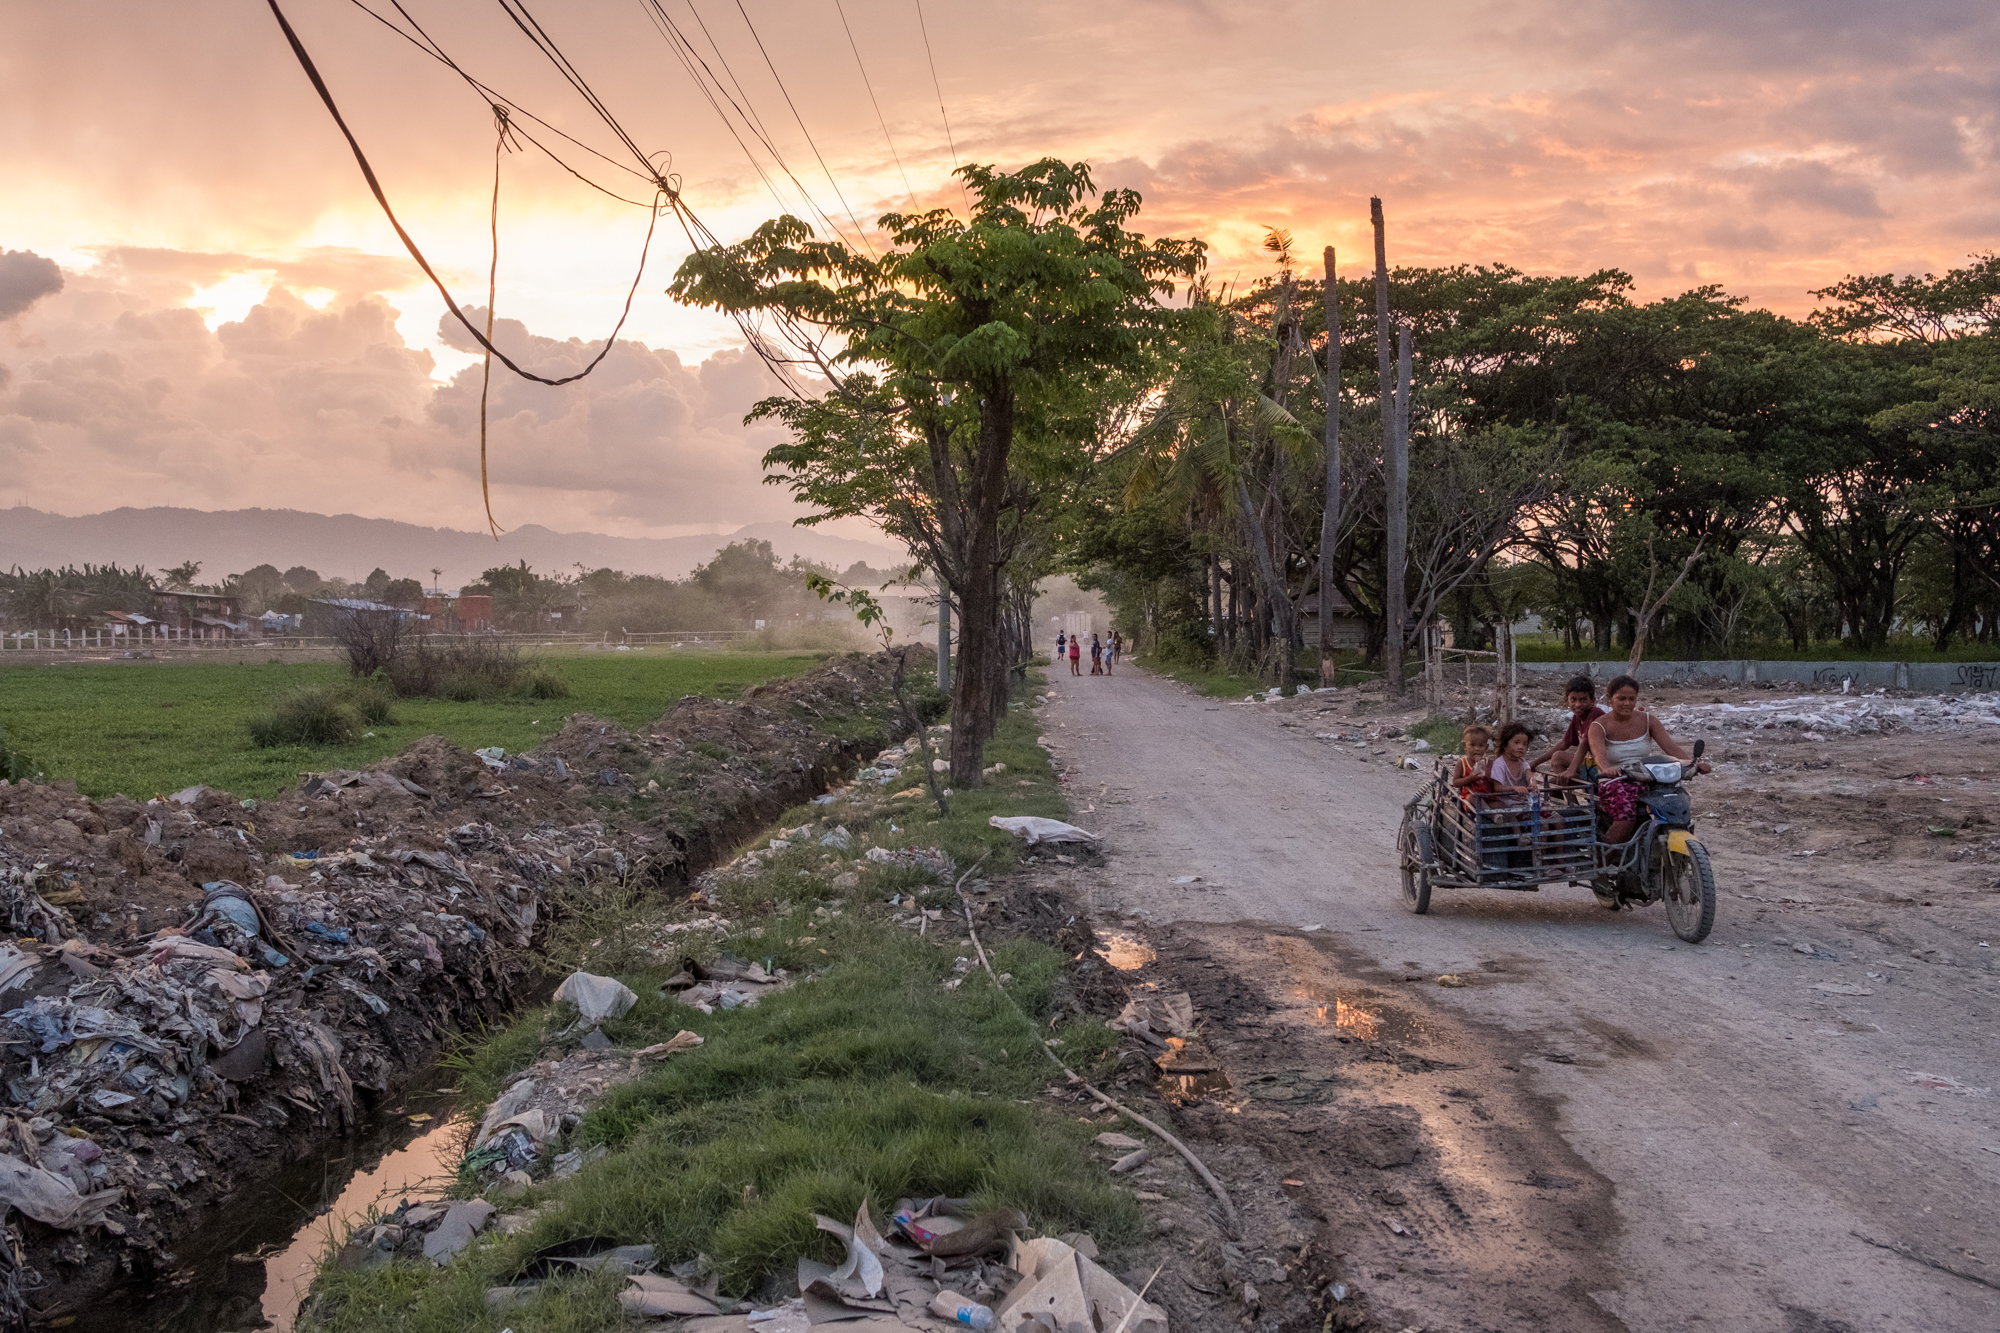  A colorful sunset illuminates the sky as people drive along a road near the Mandaue Dump Site in Cebu, Philippines. 